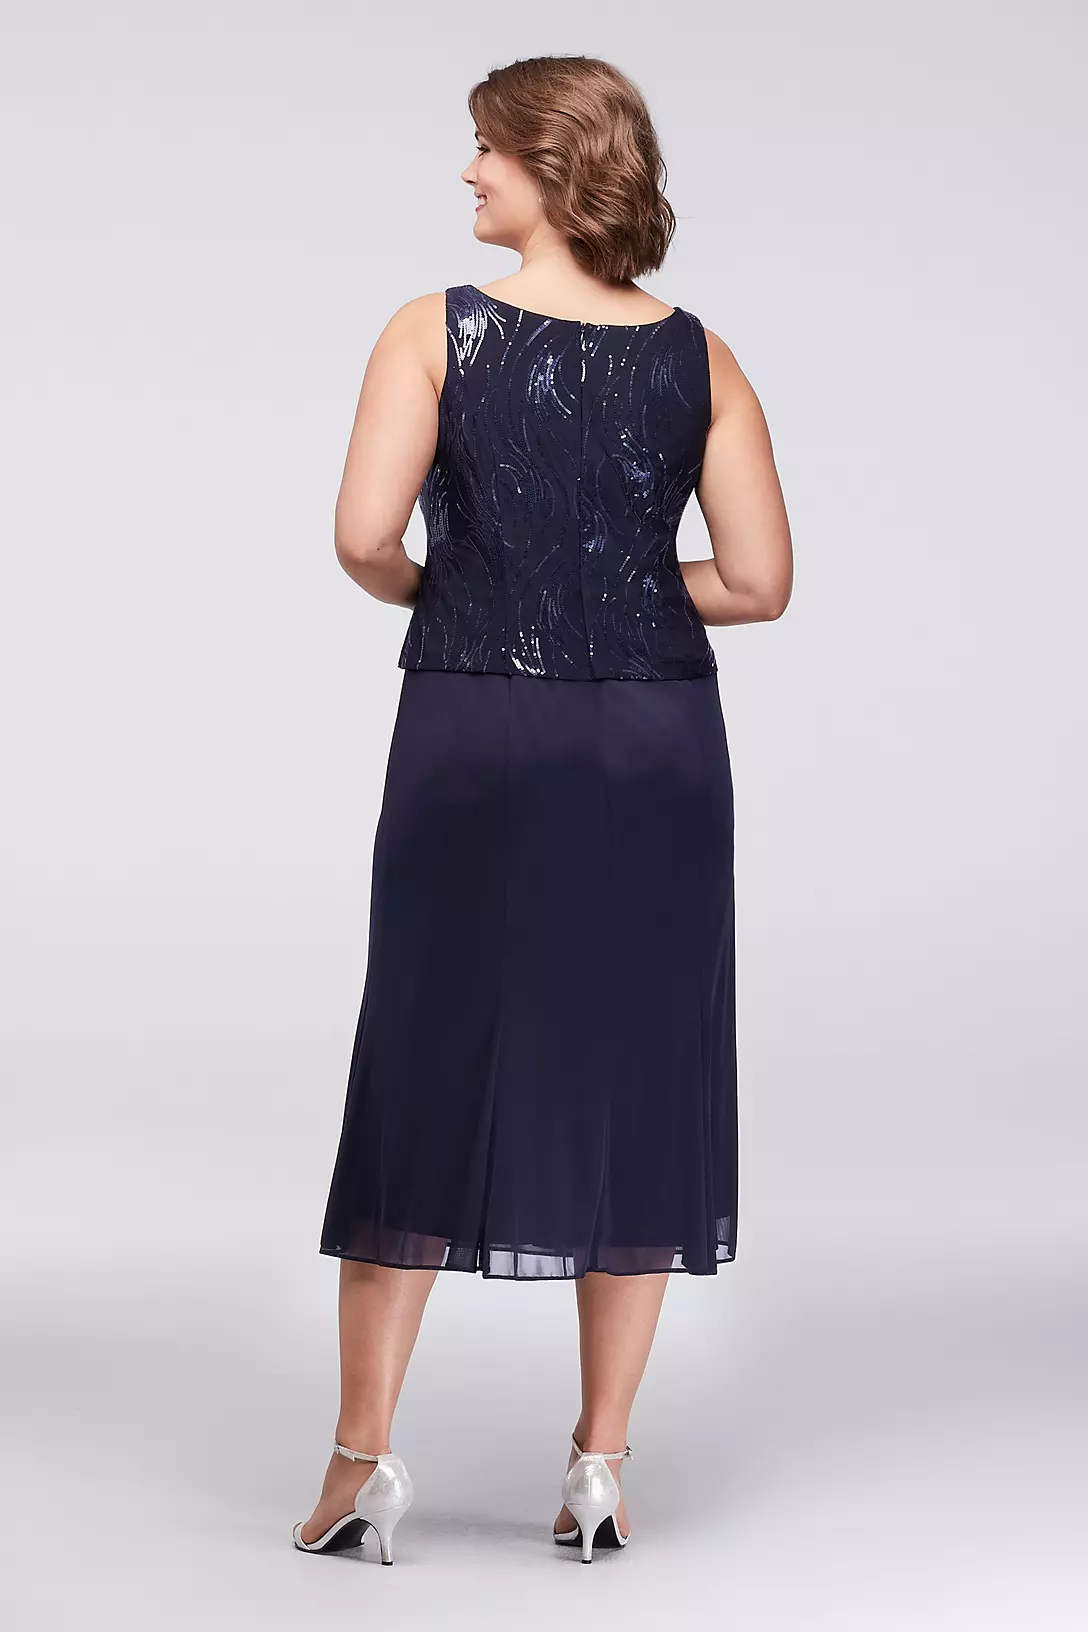 Sequined Tea-Length Plus Size Dress and Jacket Set Image 4